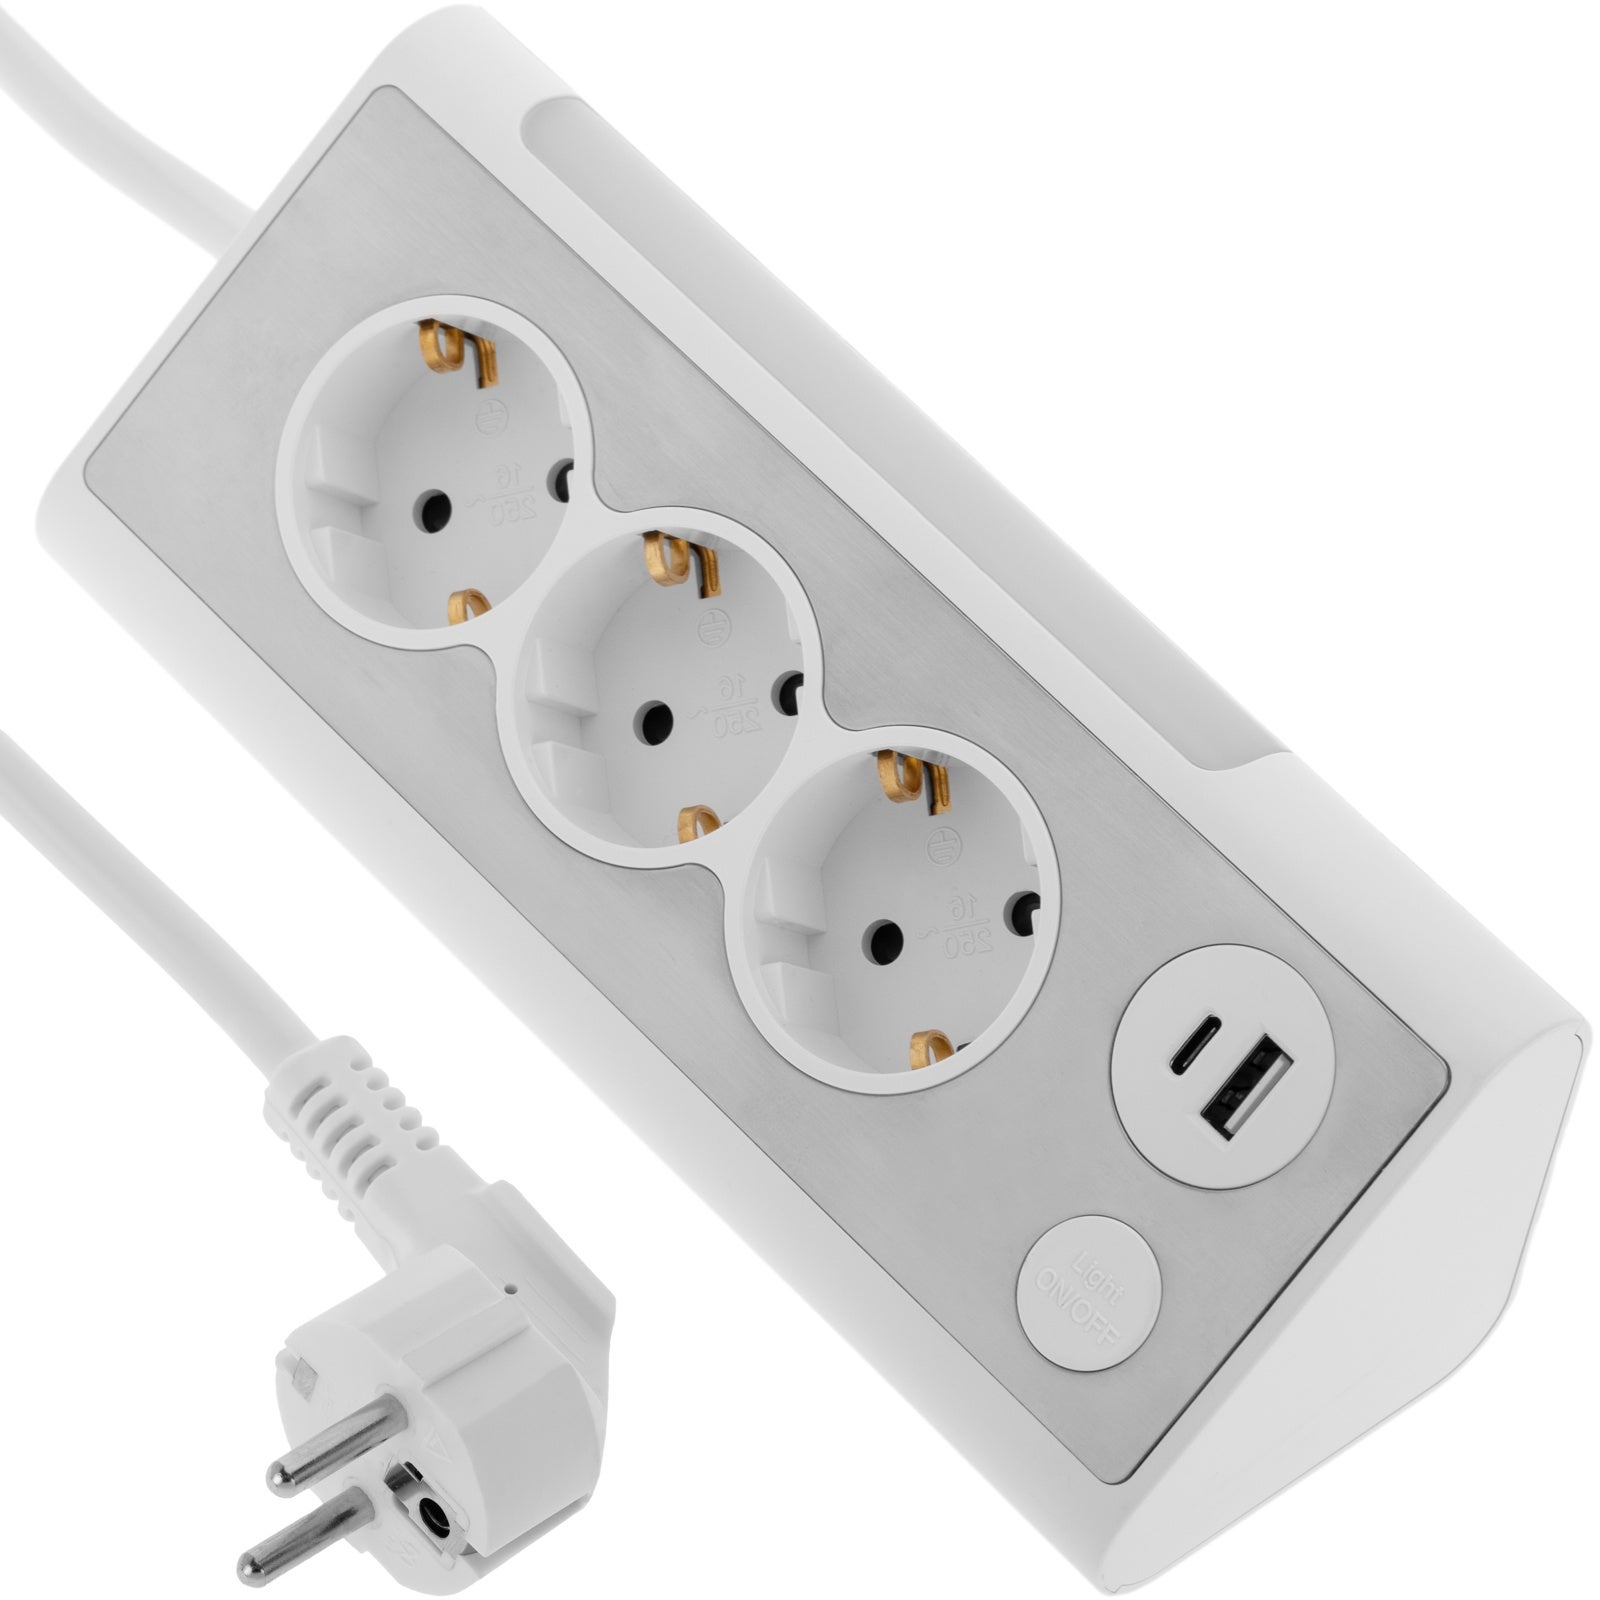 regleta eléctrica 3 enchufes con USB